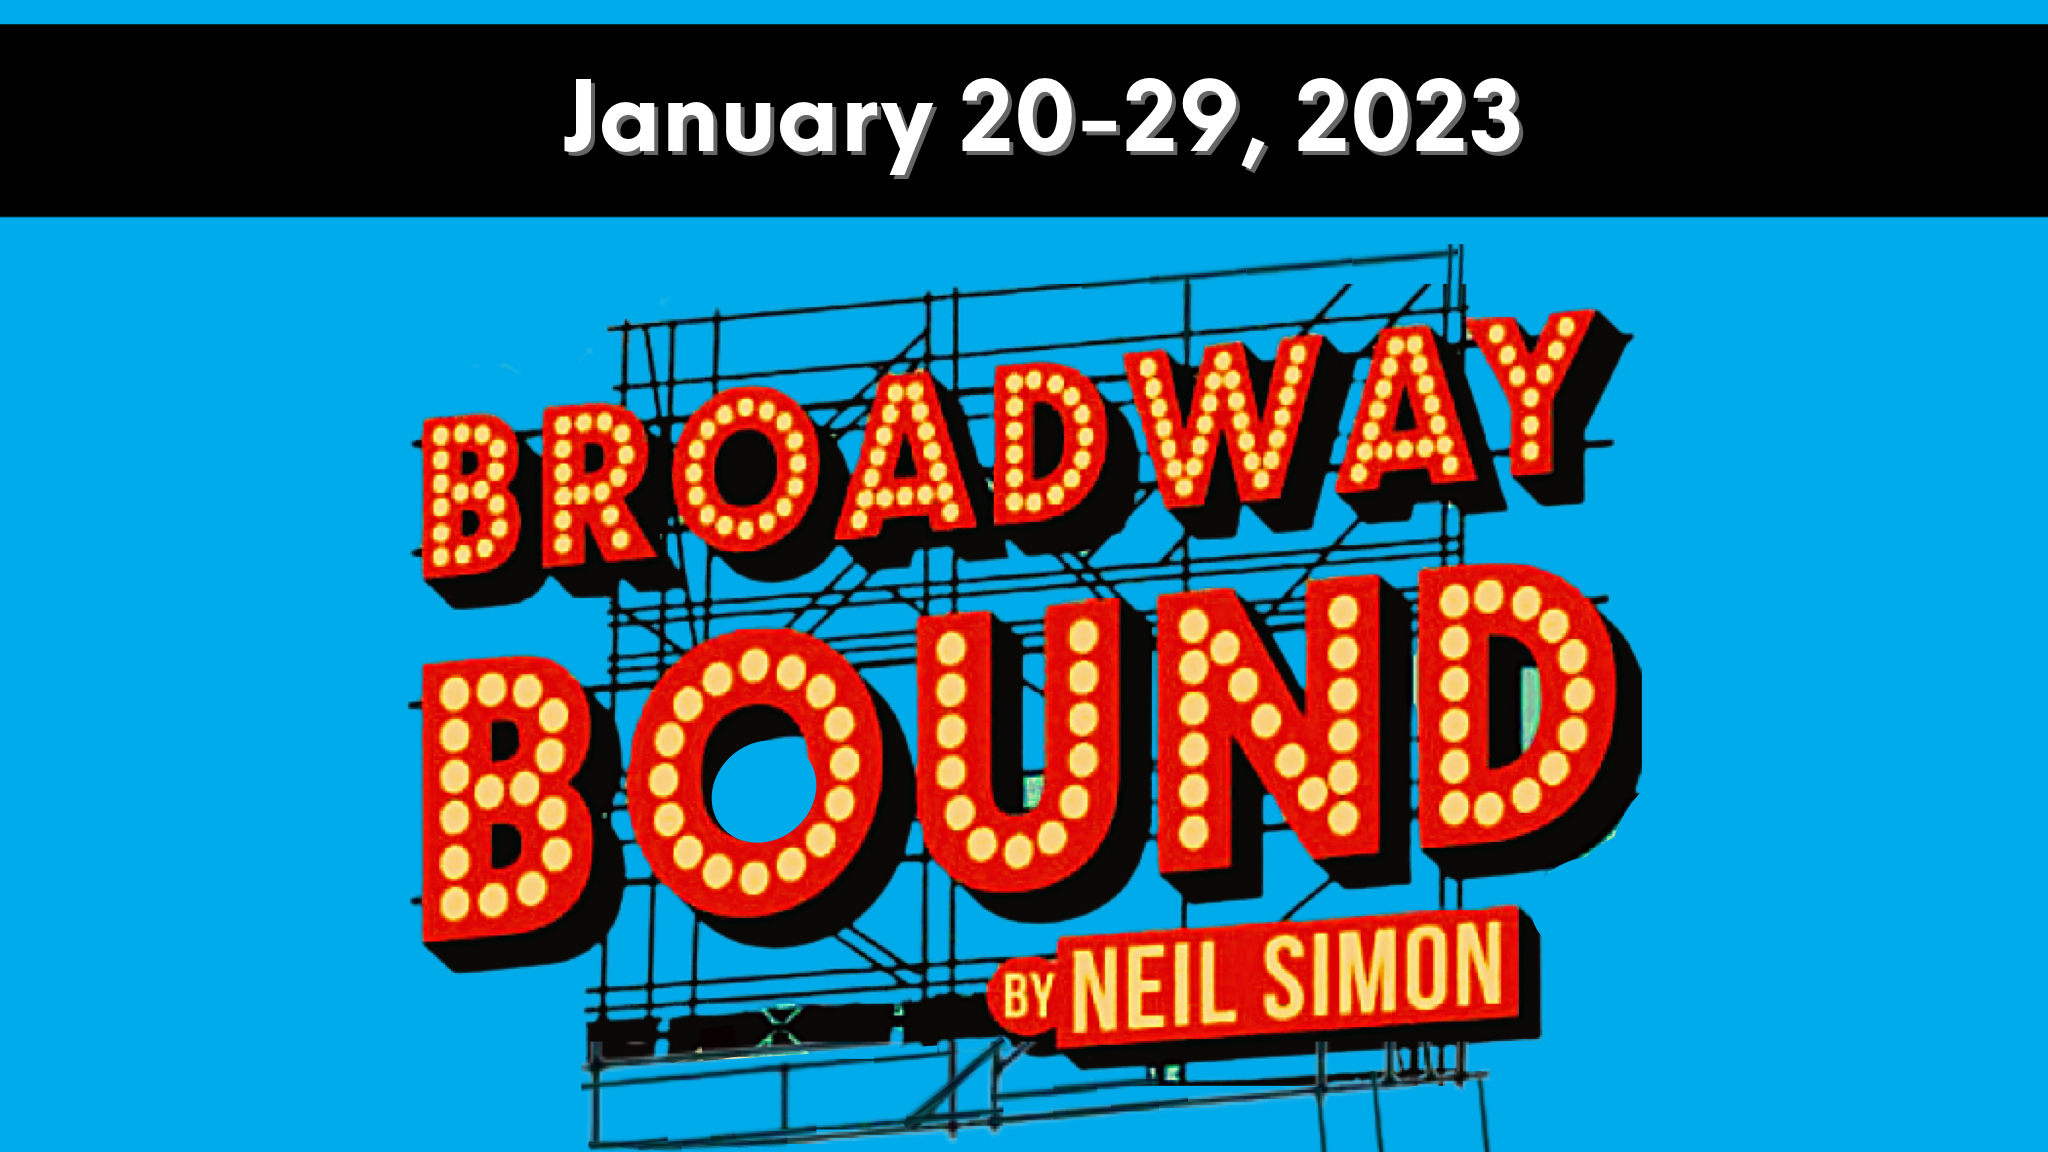 Broadway Bound by Neil Simon